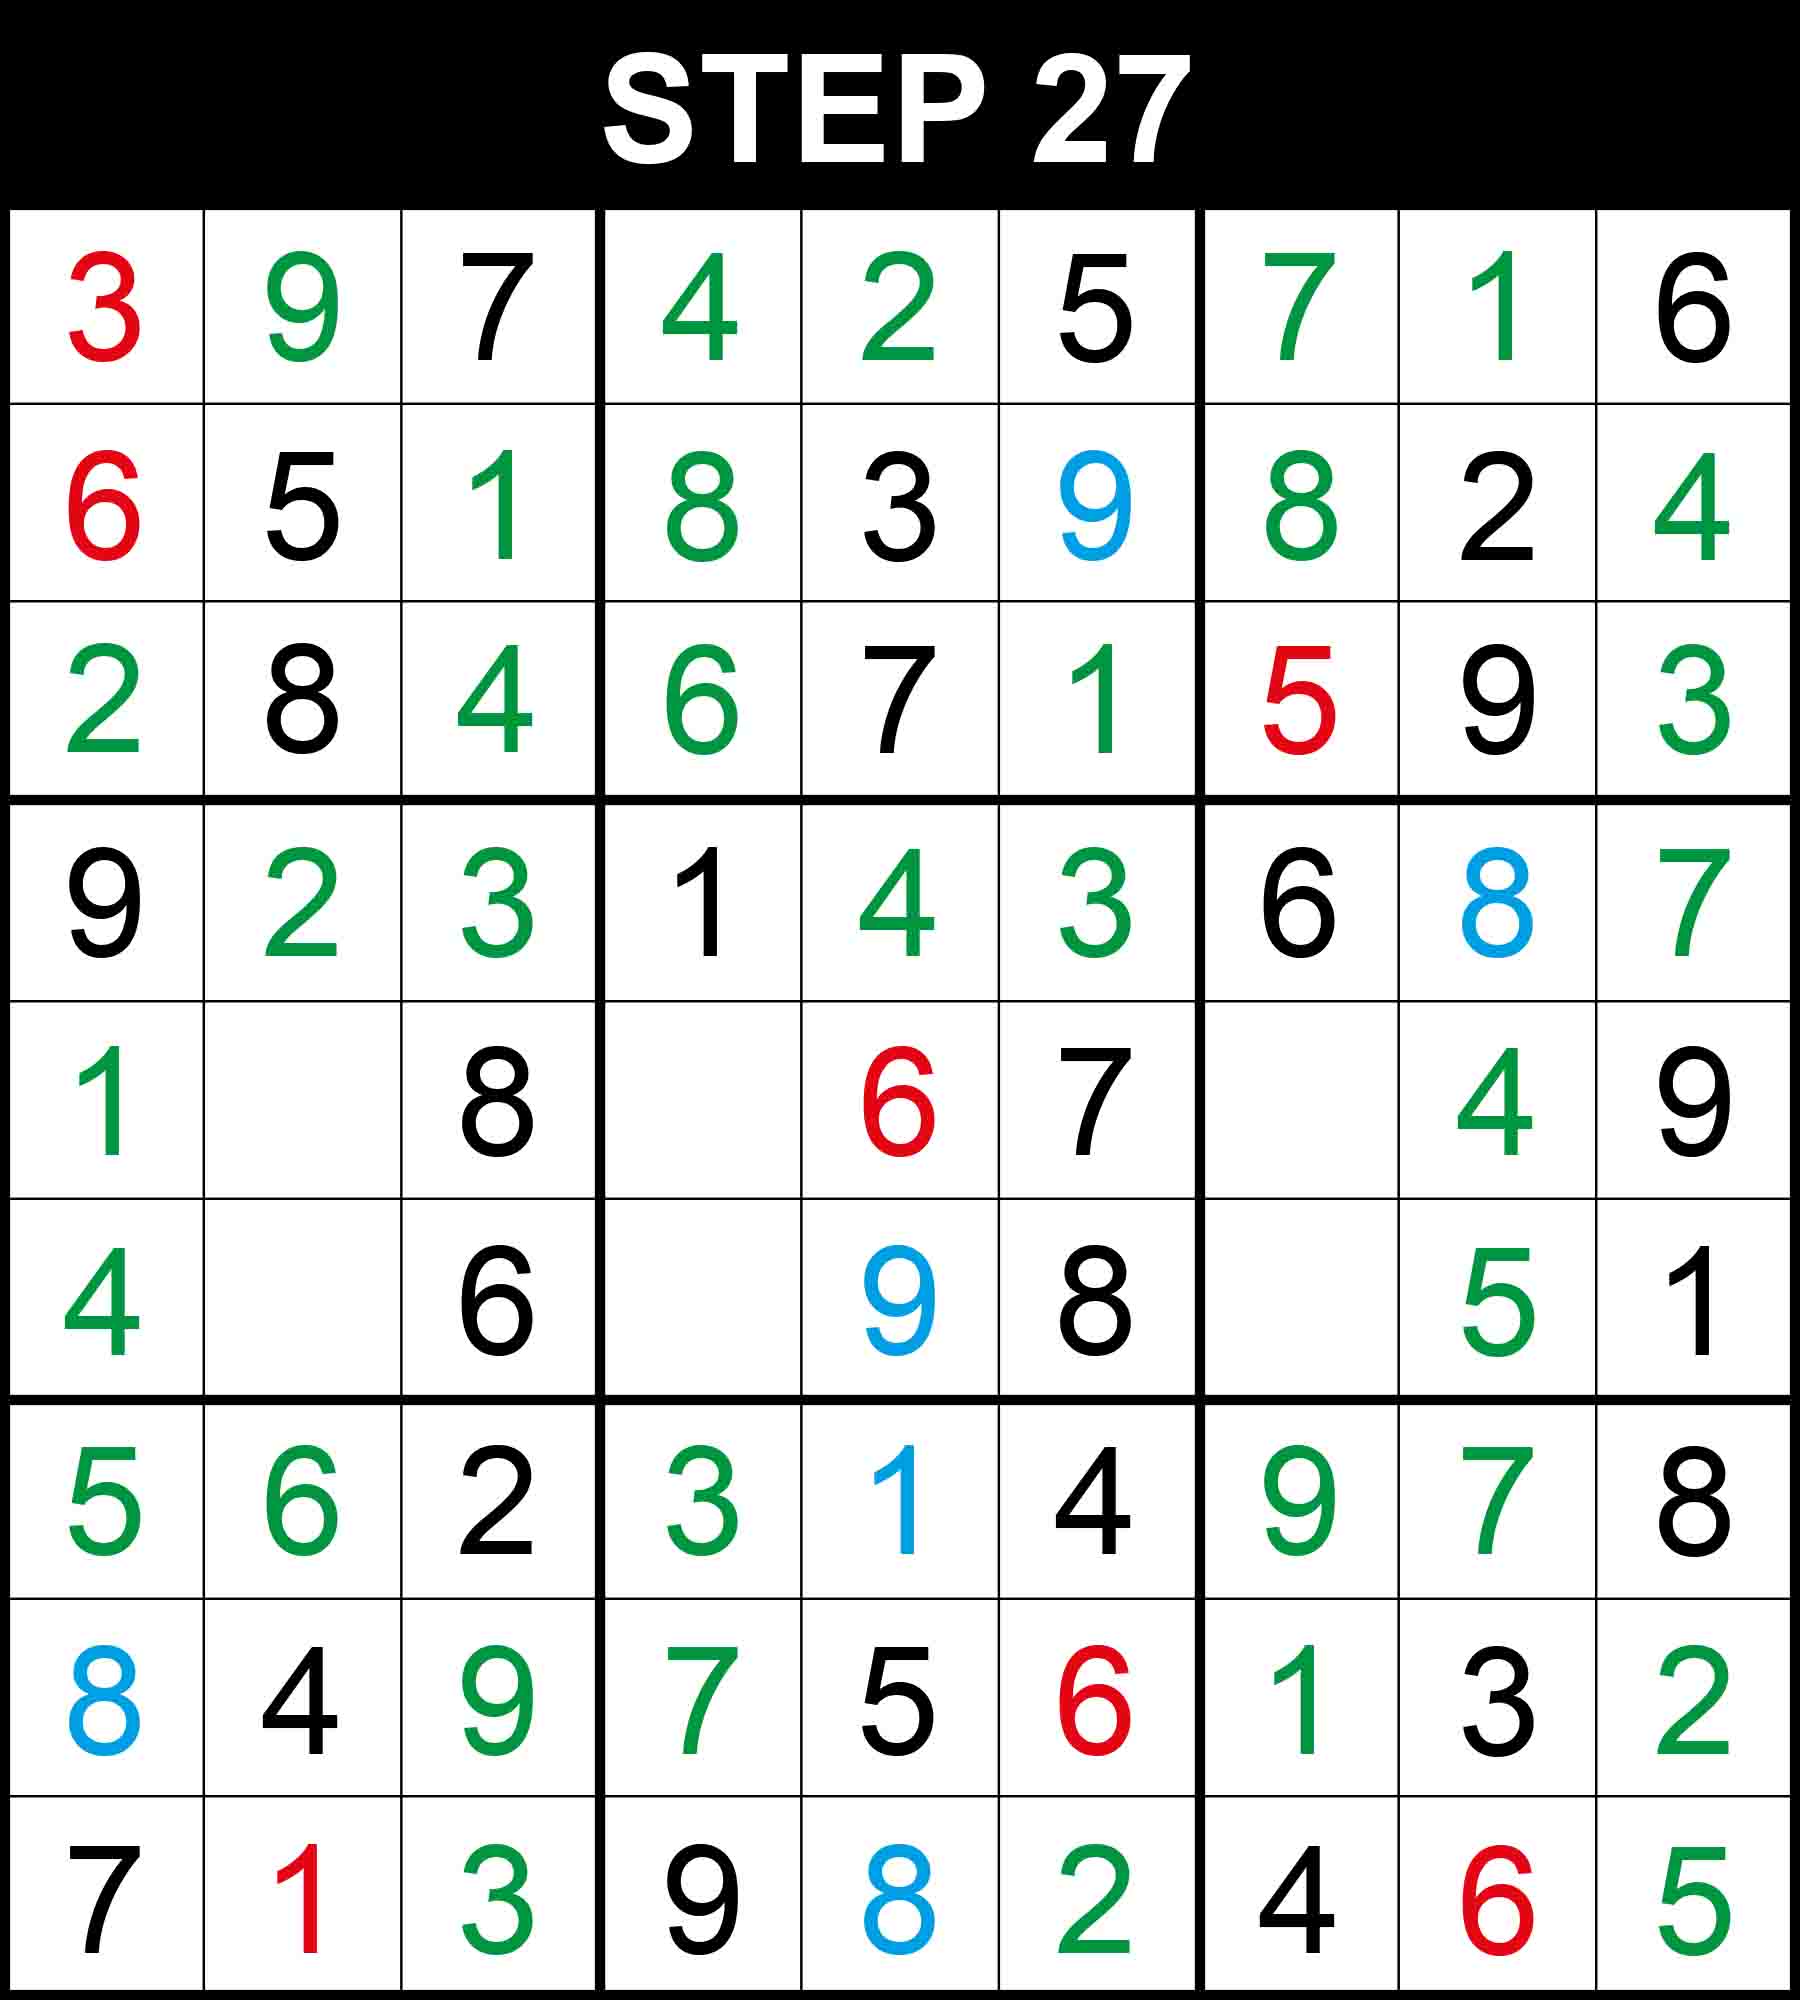 Solving Sudoku